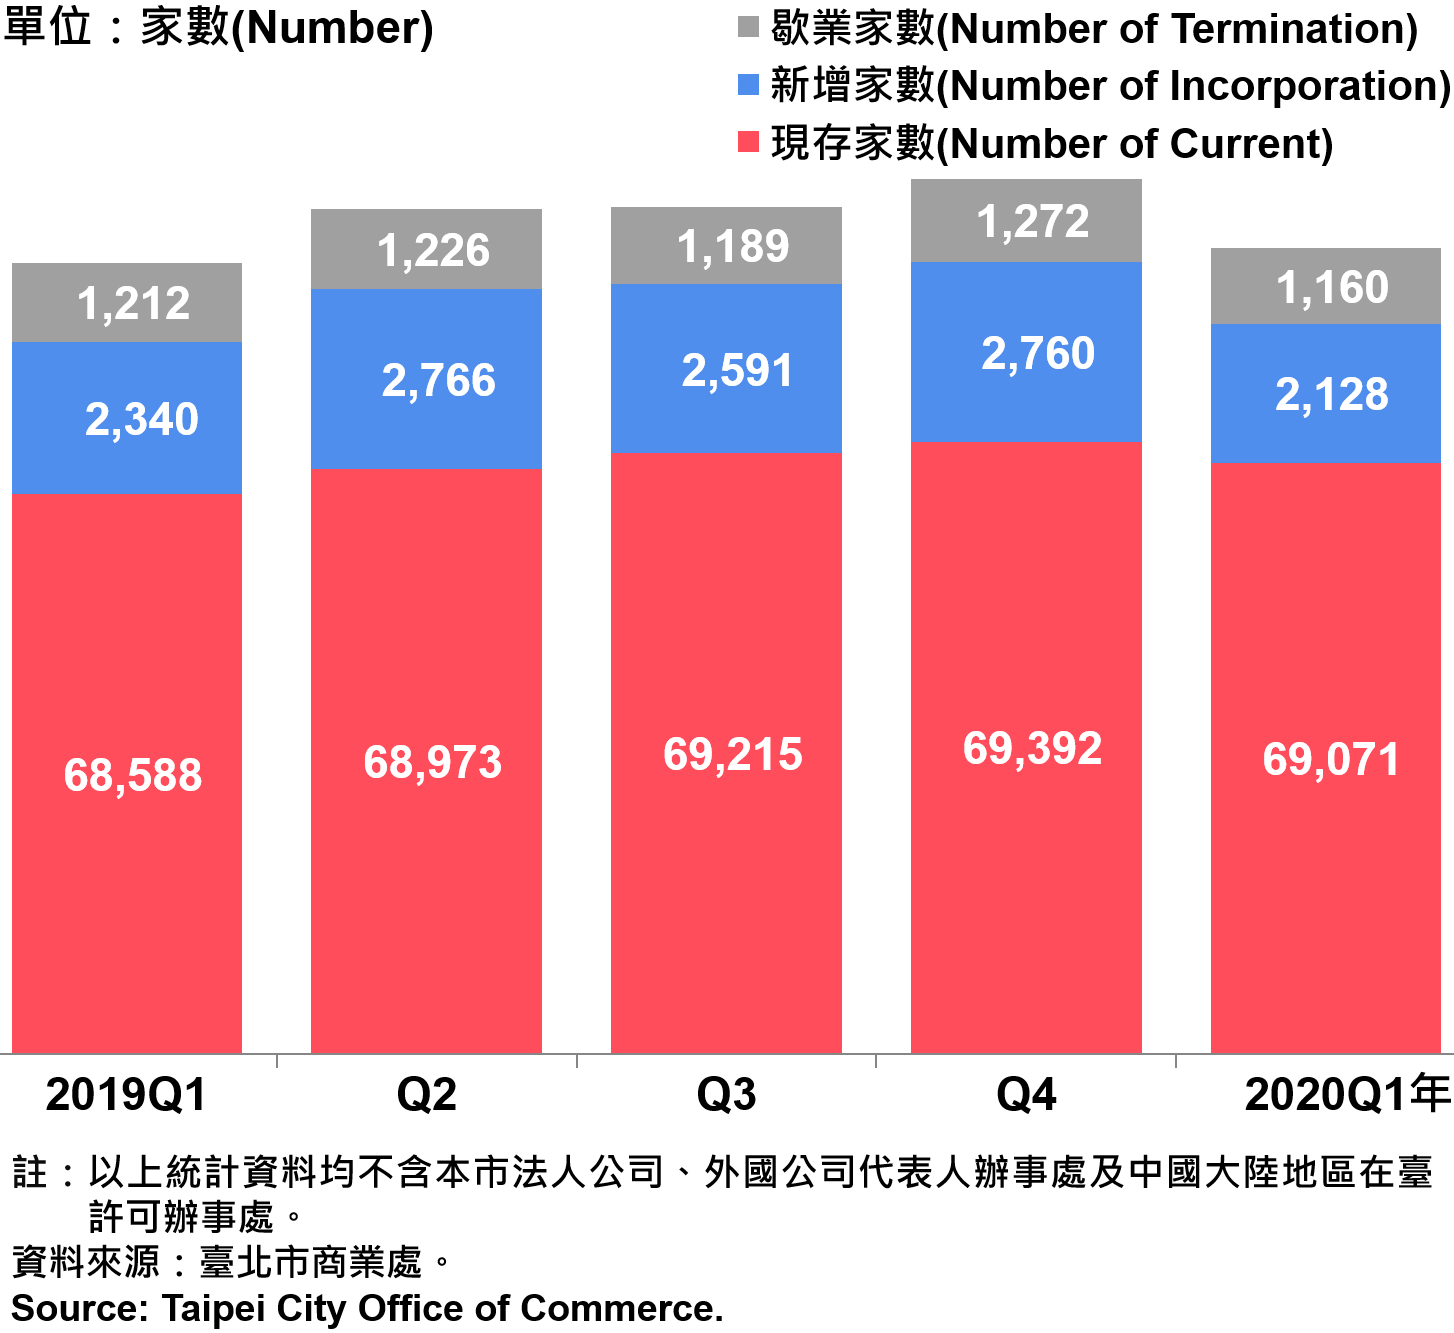 臺北市公司行號之青創負責人分布情形—2020Q1 Responsible Person of Newly Registered Companies In Taipei City —2020Q1